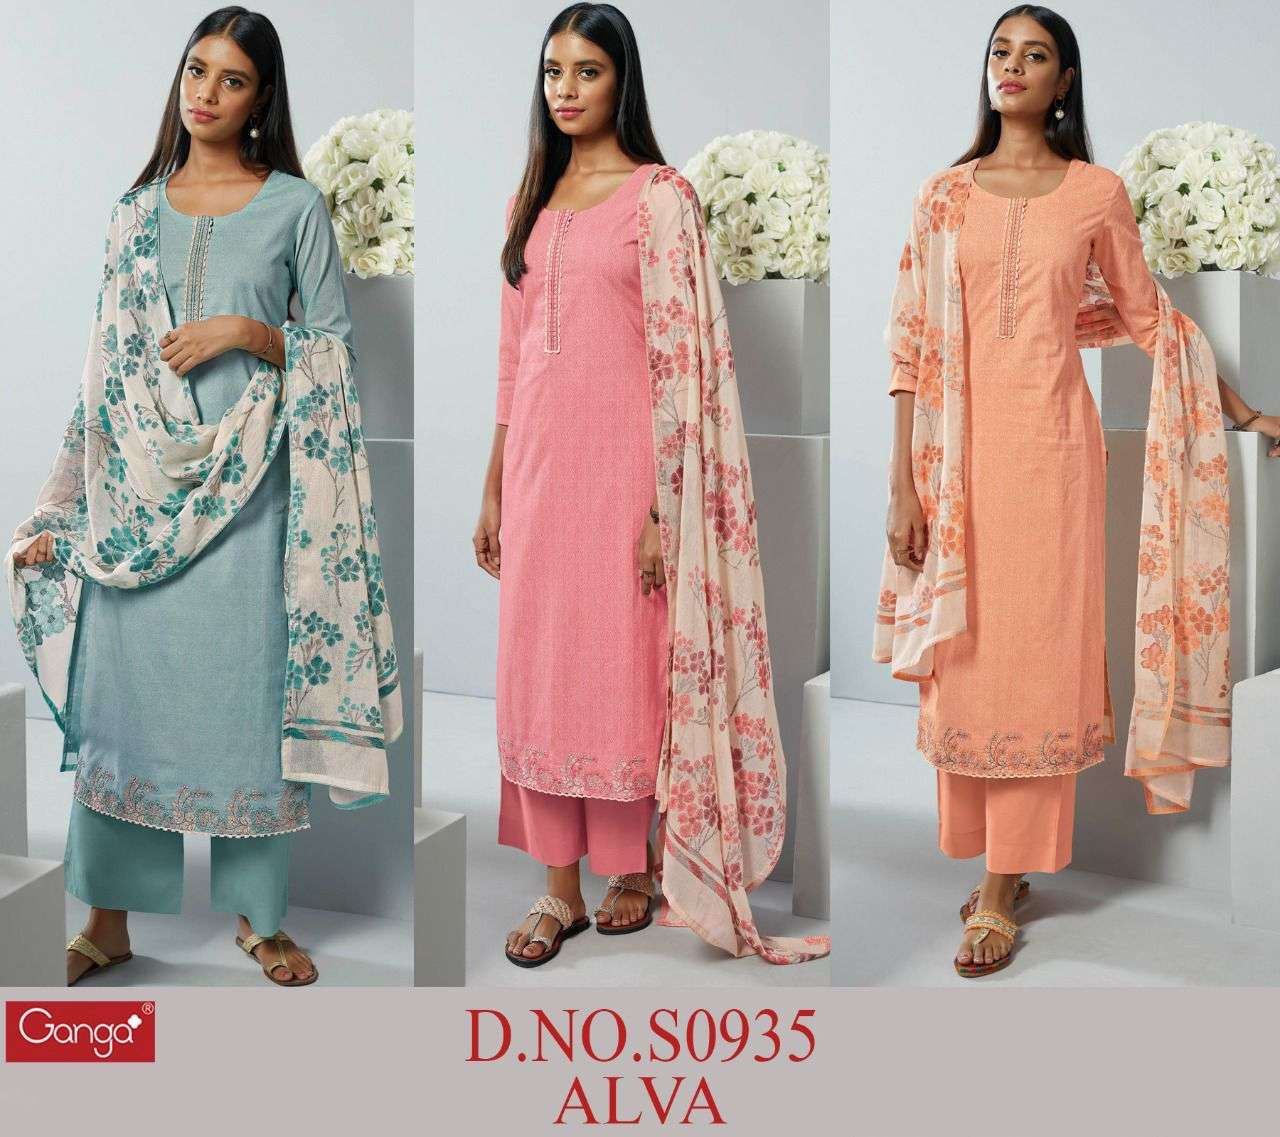 ganga alva 935 latest designer dress material catalogue wholesale price surat